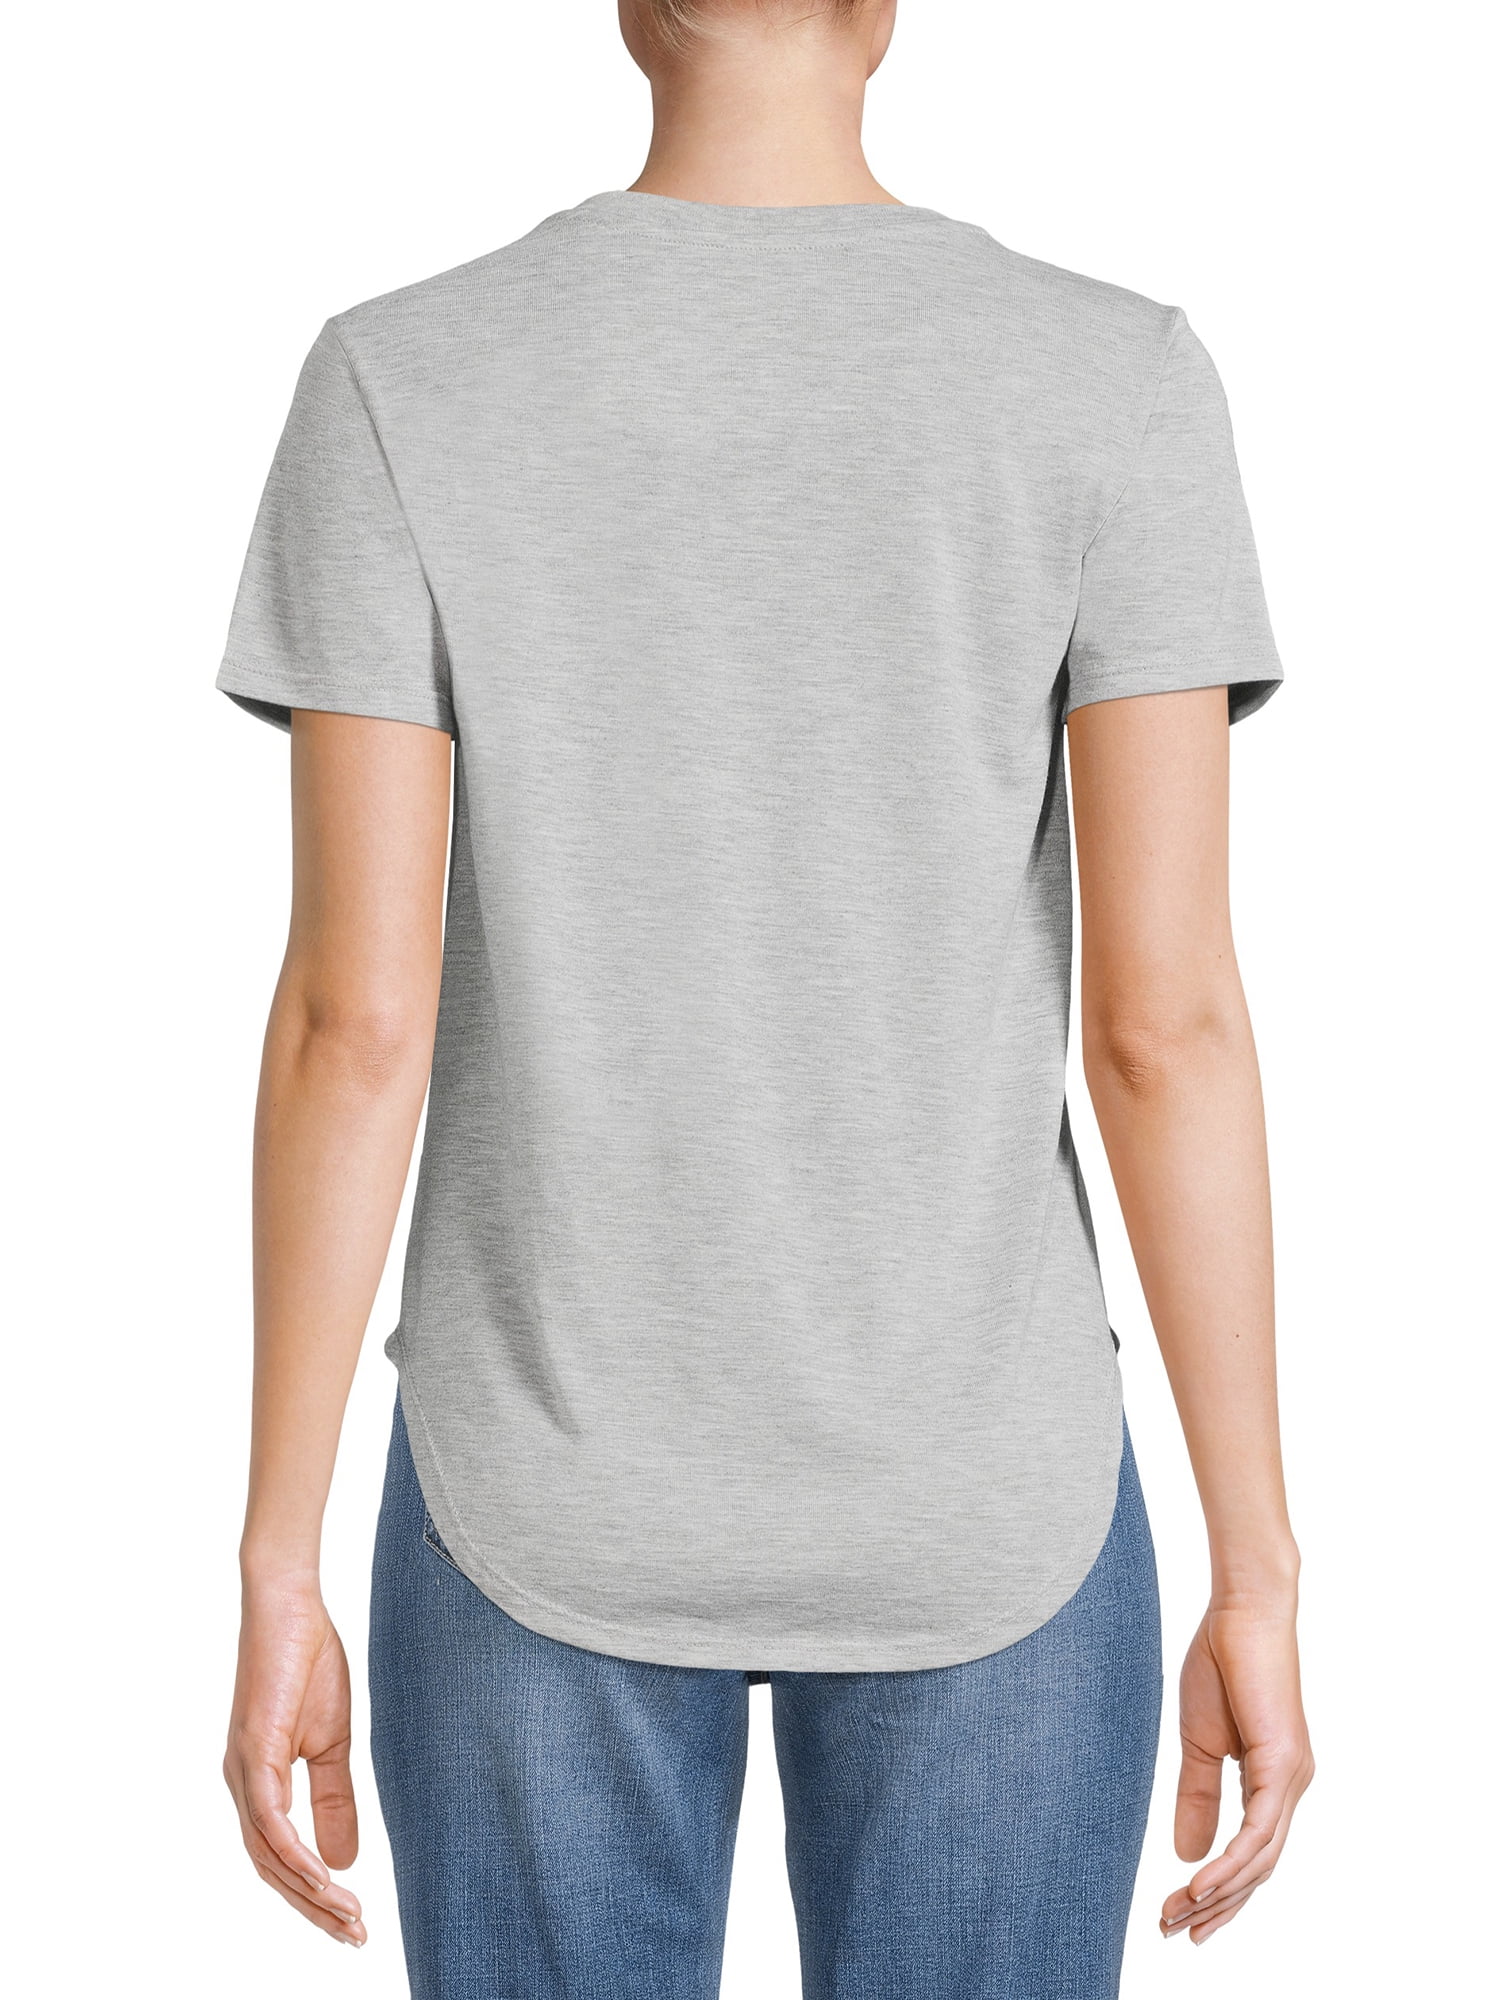 LSPWAFAEF pikamee Crewneck Tee Shirt Casual Tshirt Man/Woman Short